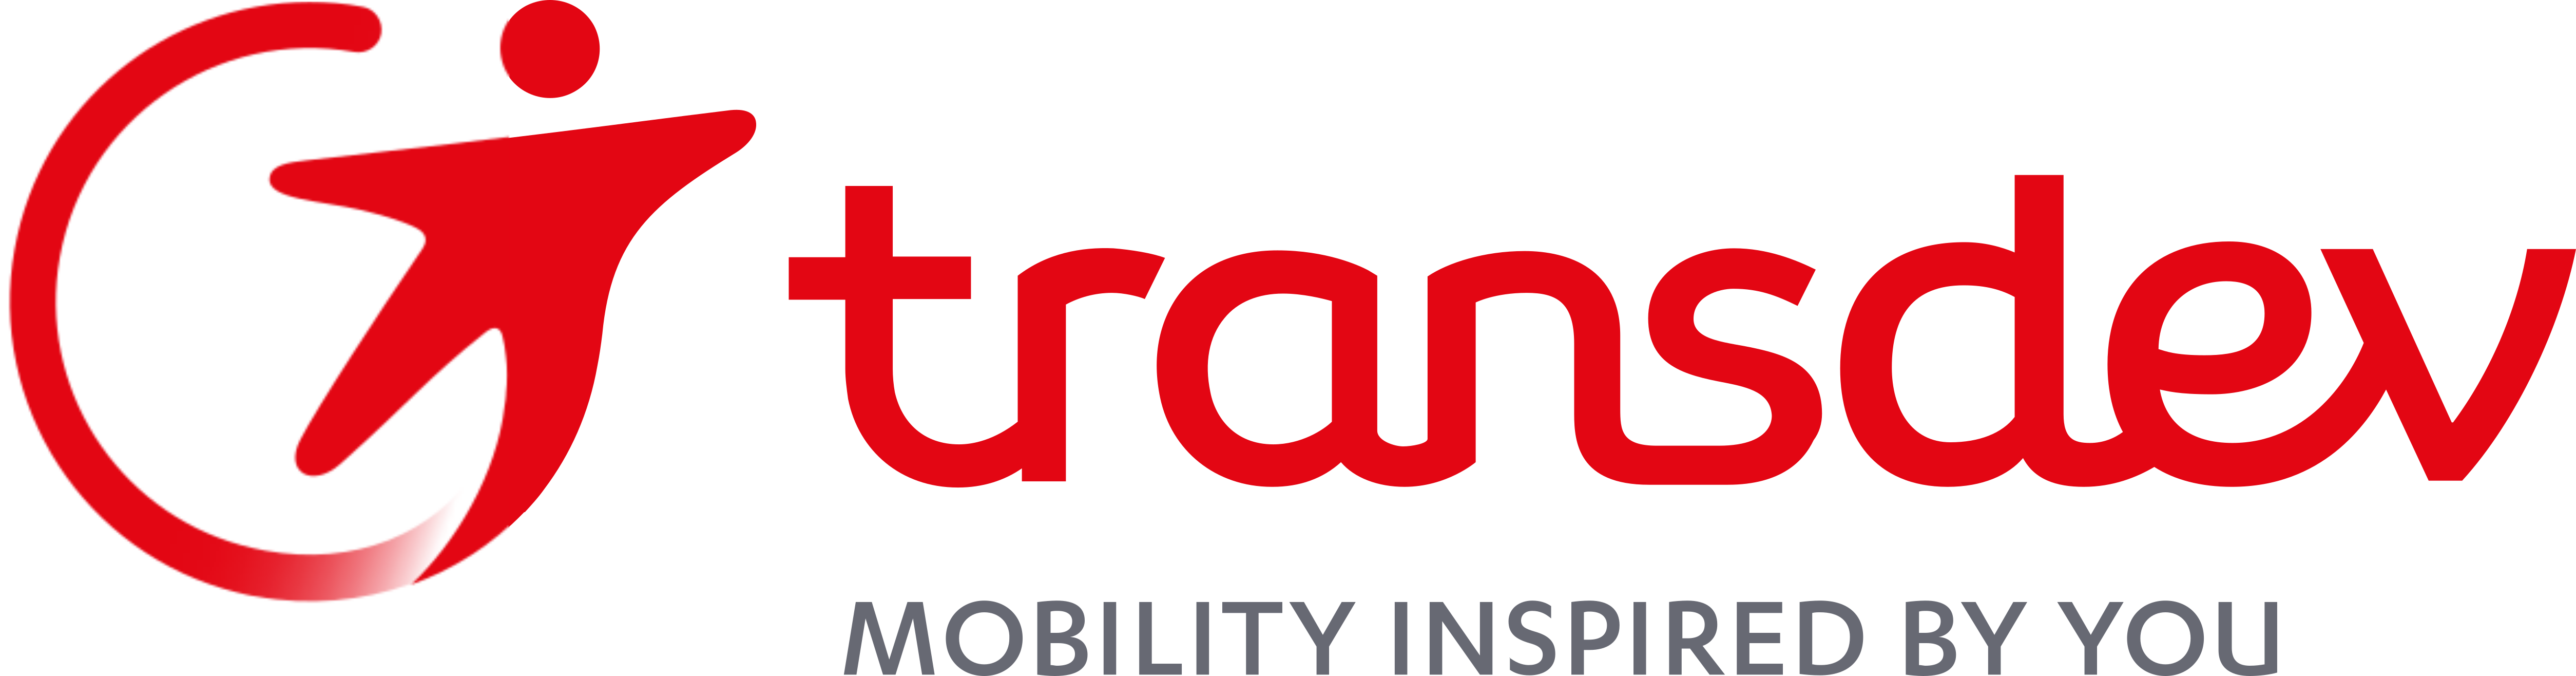 Transdev_Logo